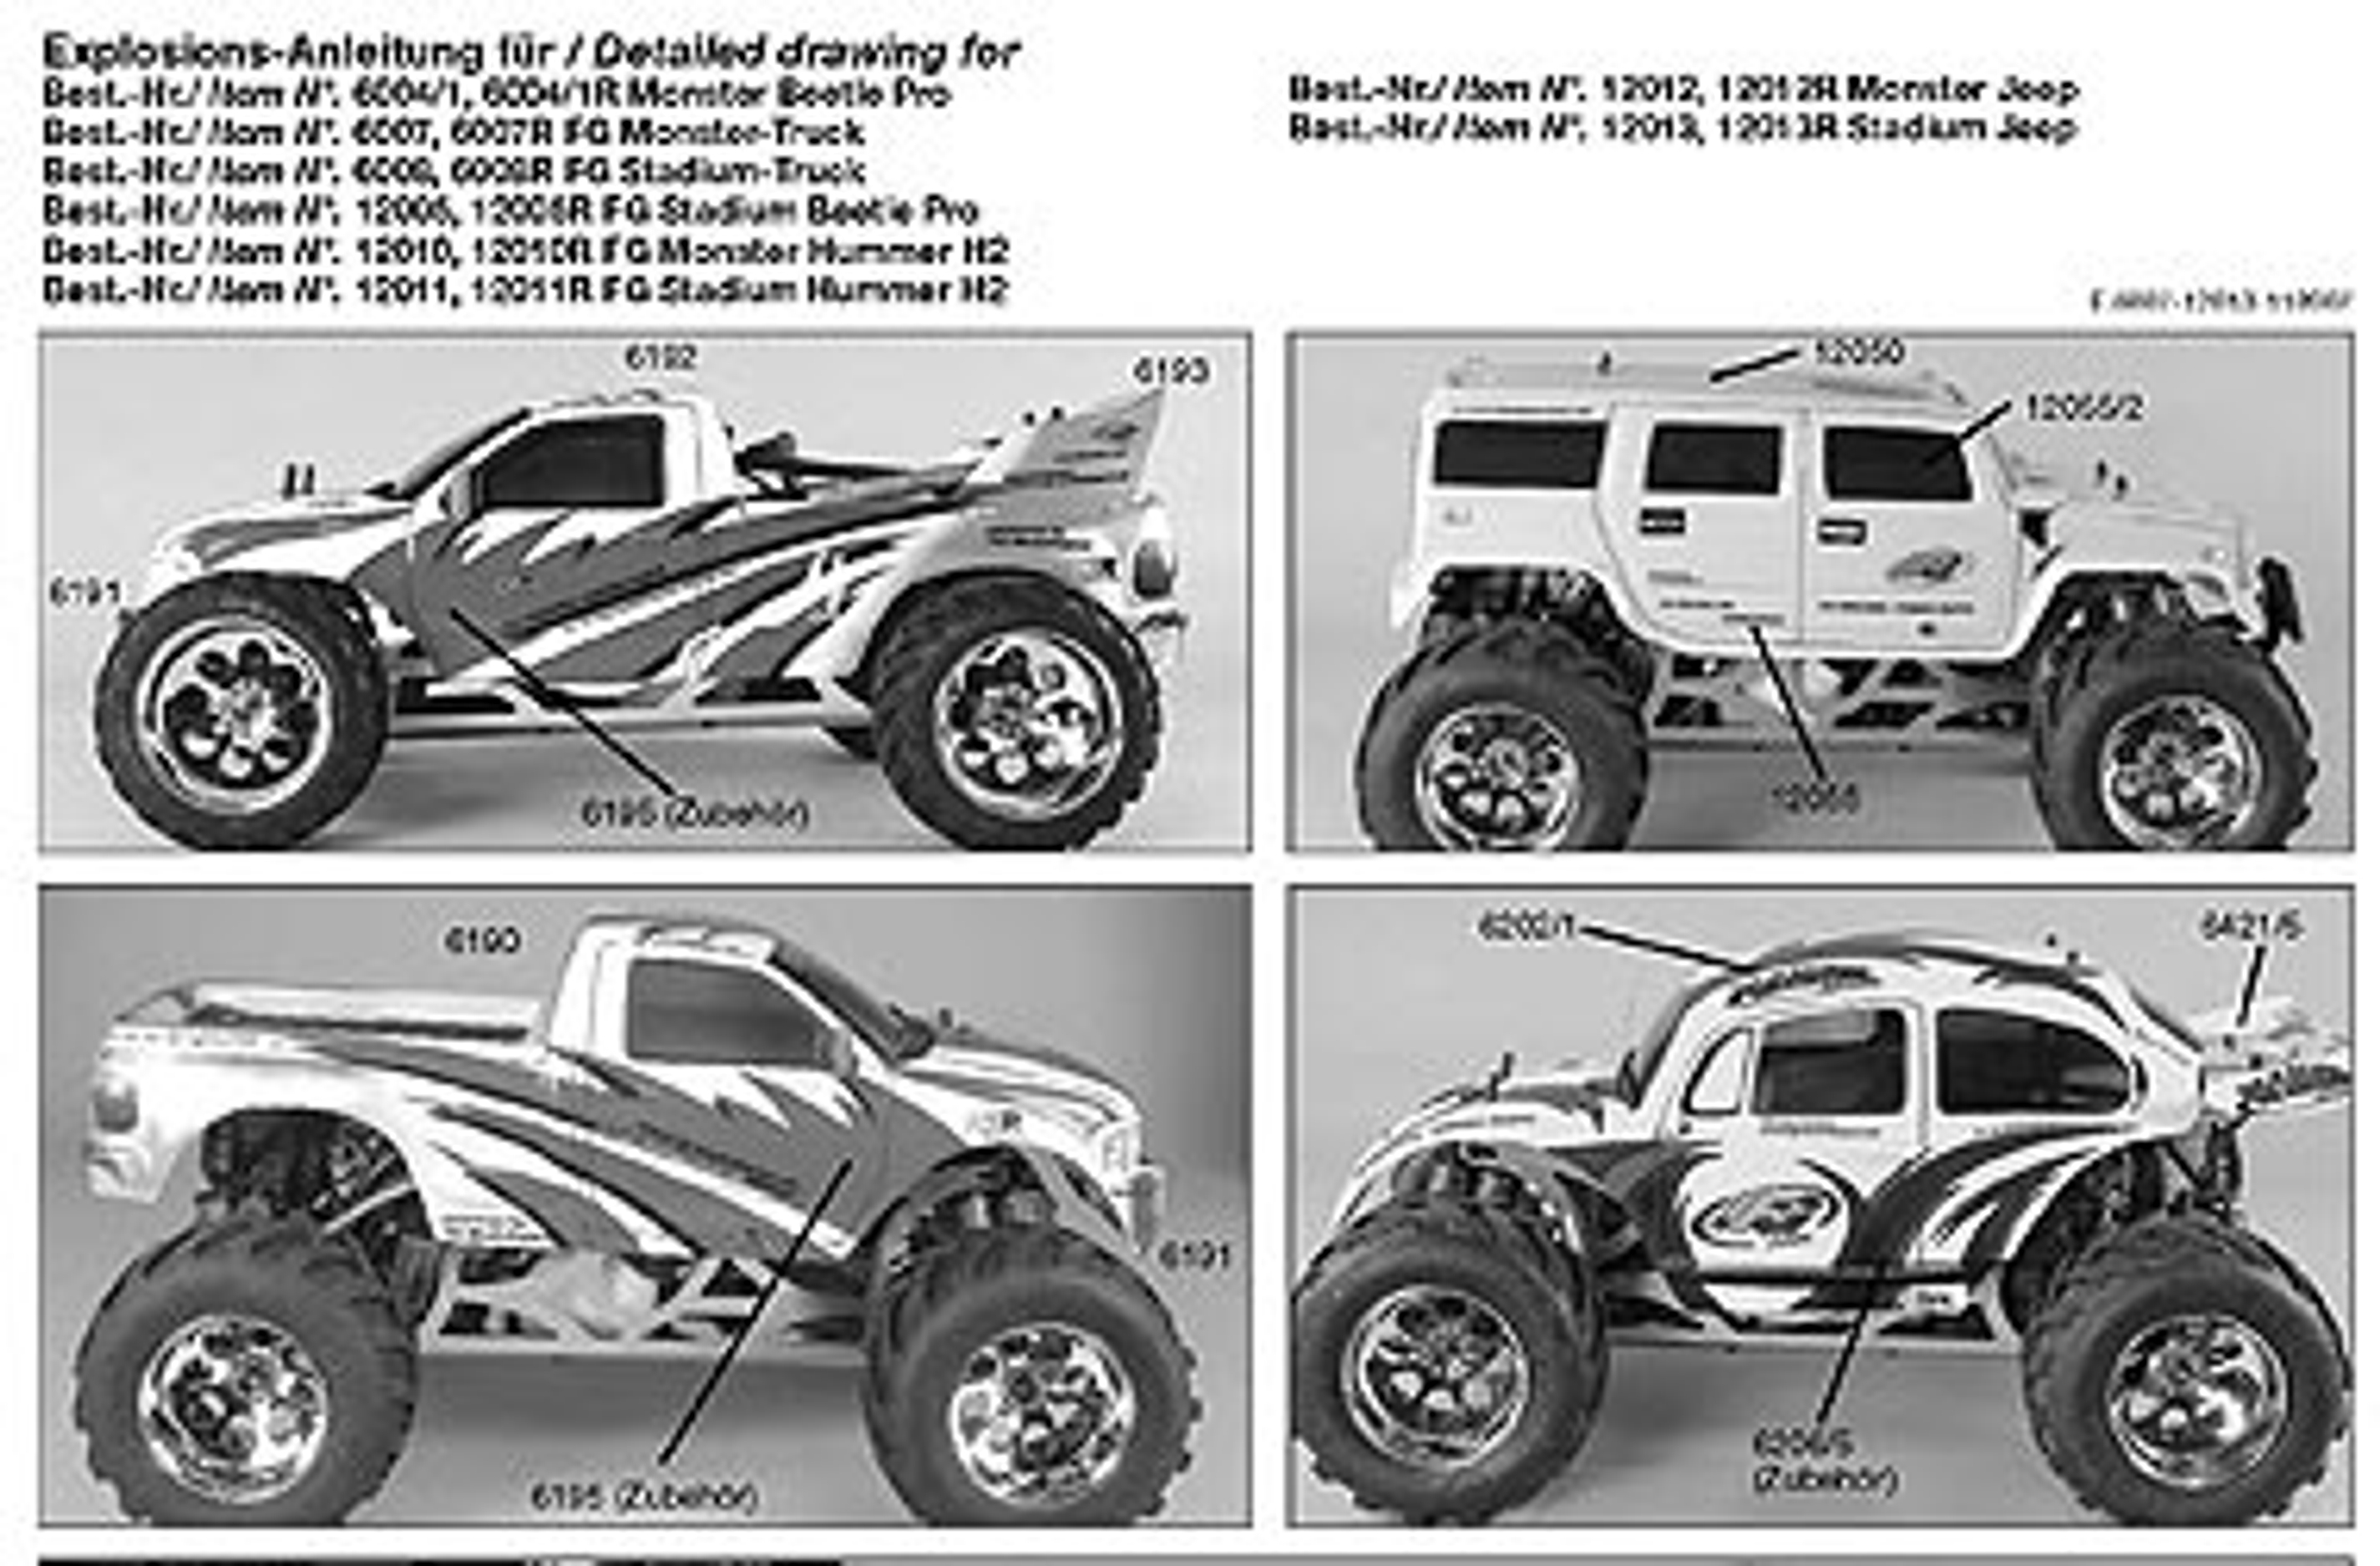 y0961 FG manuals set all 2WD monster + stadium cars except Monster Beetle, set